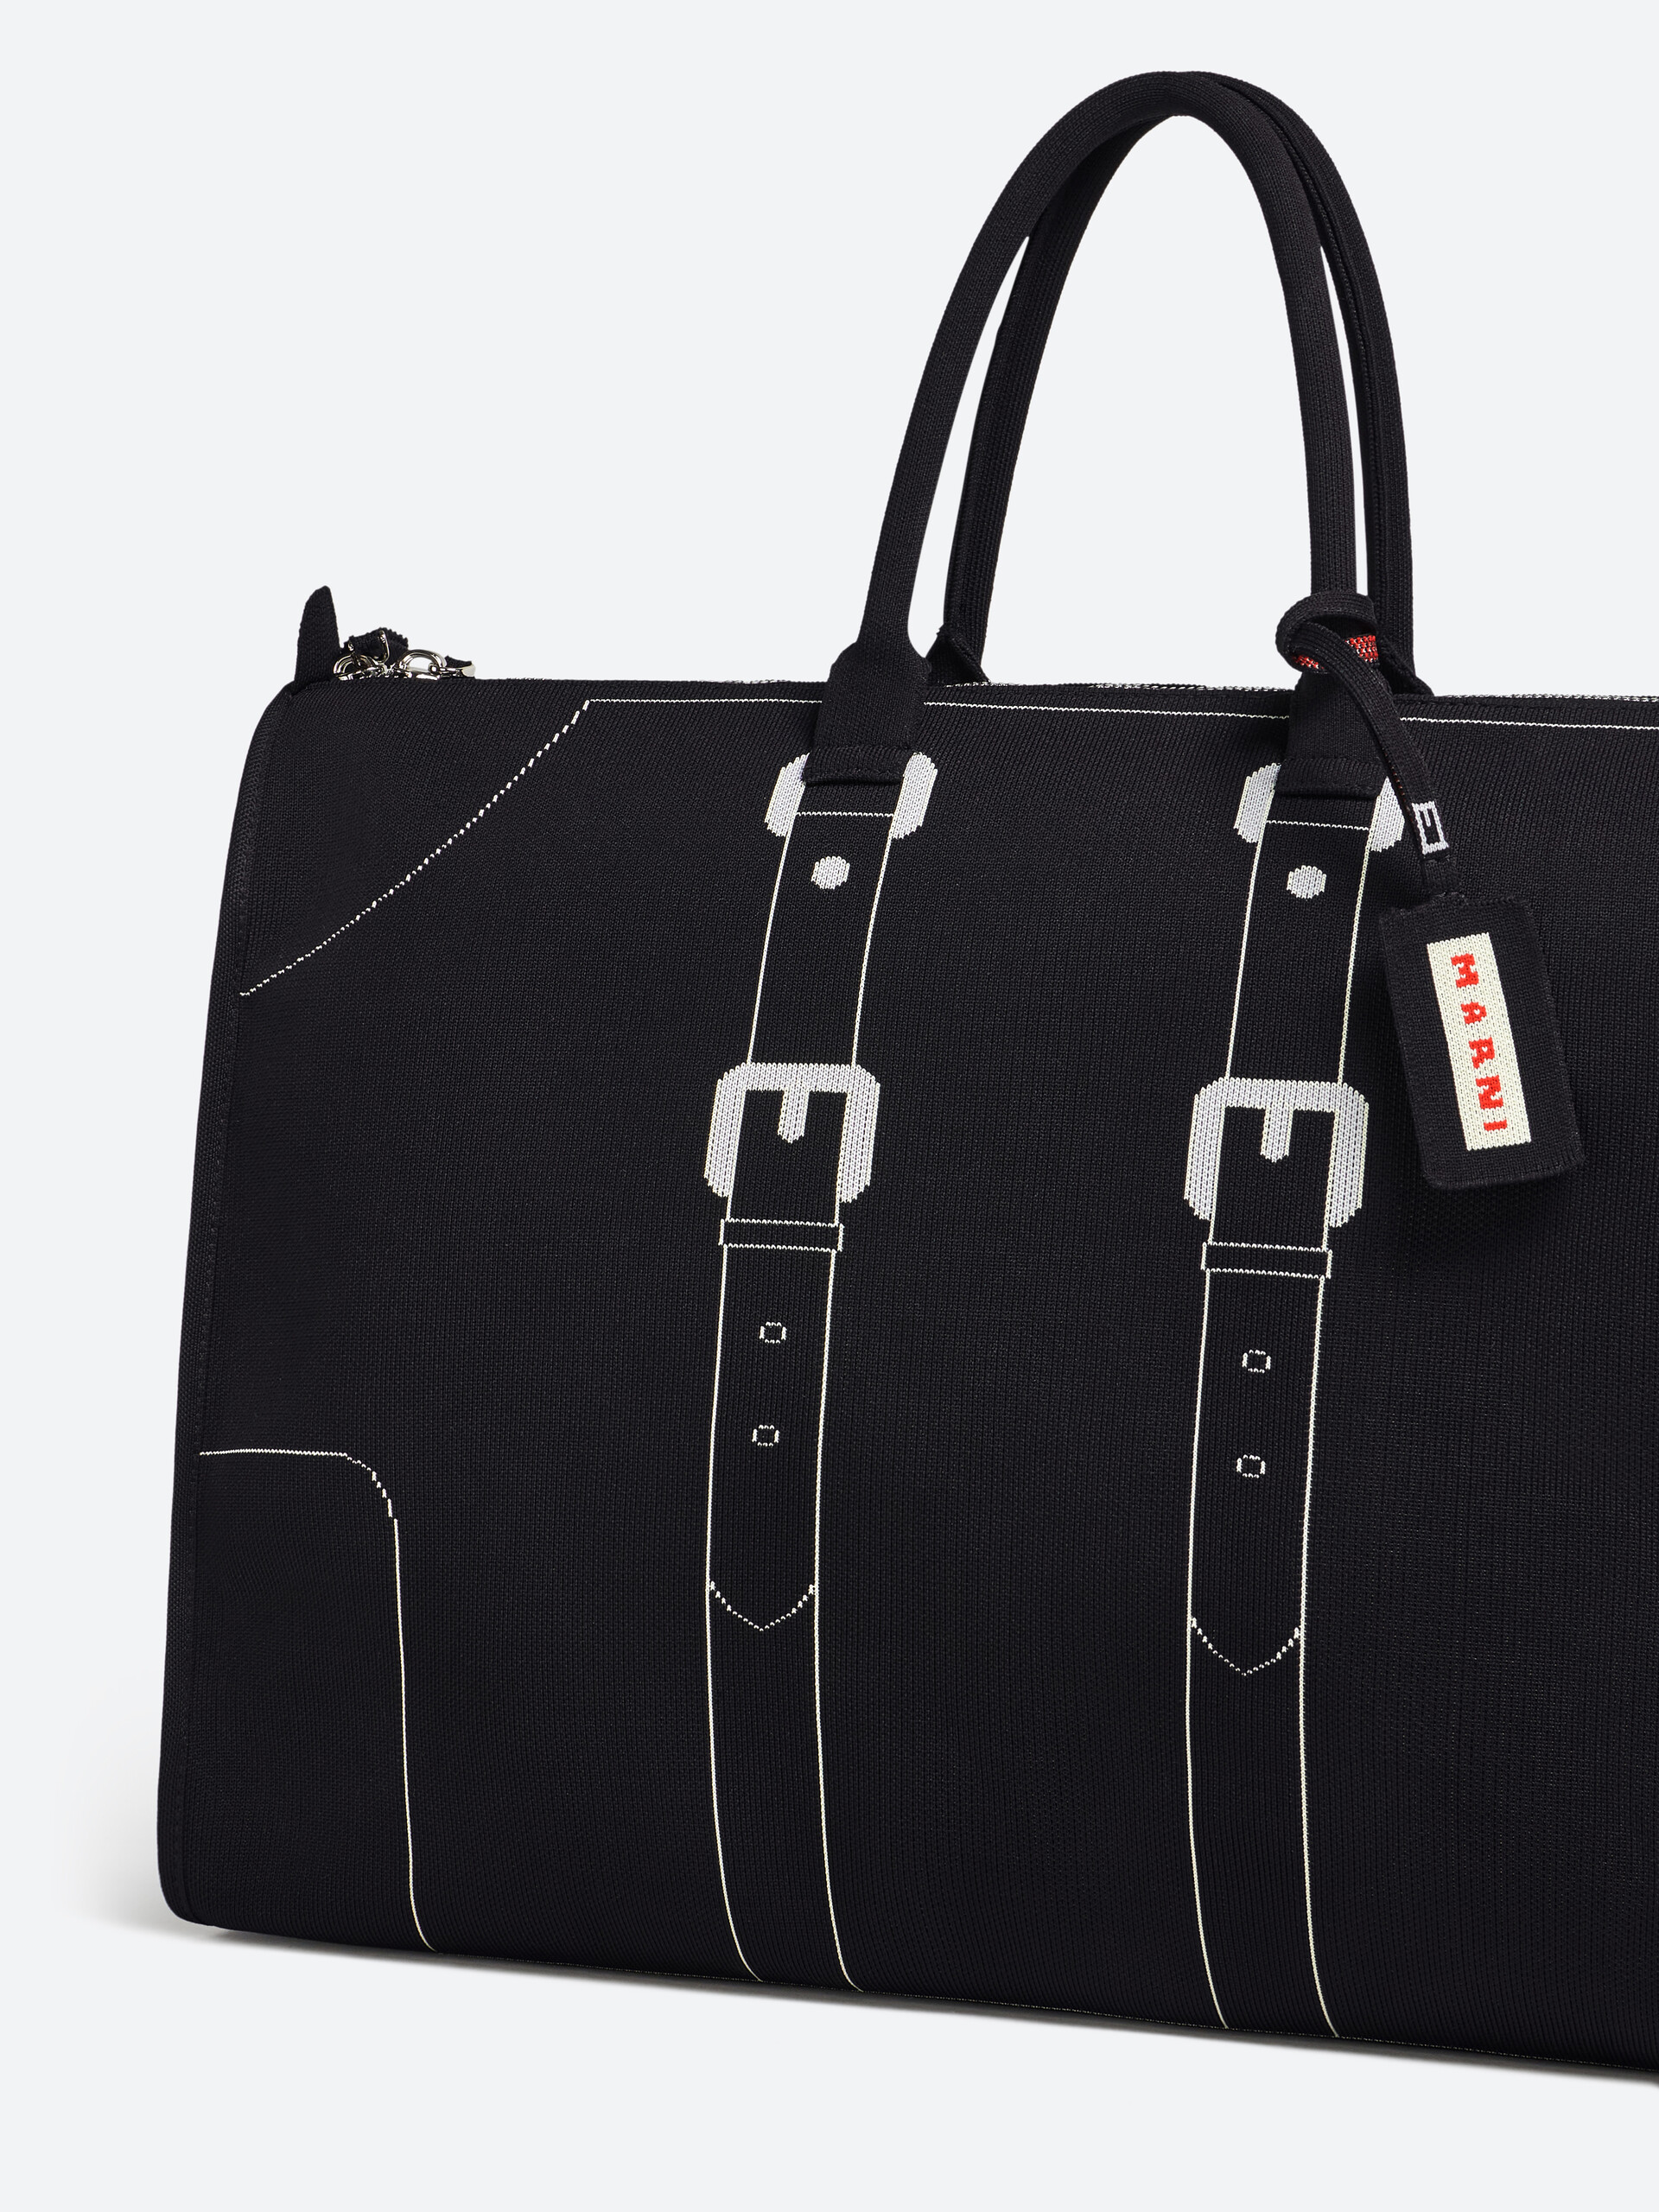 Black trompe-l'œil jacquard travel bag - Travelling Bag - Image 5